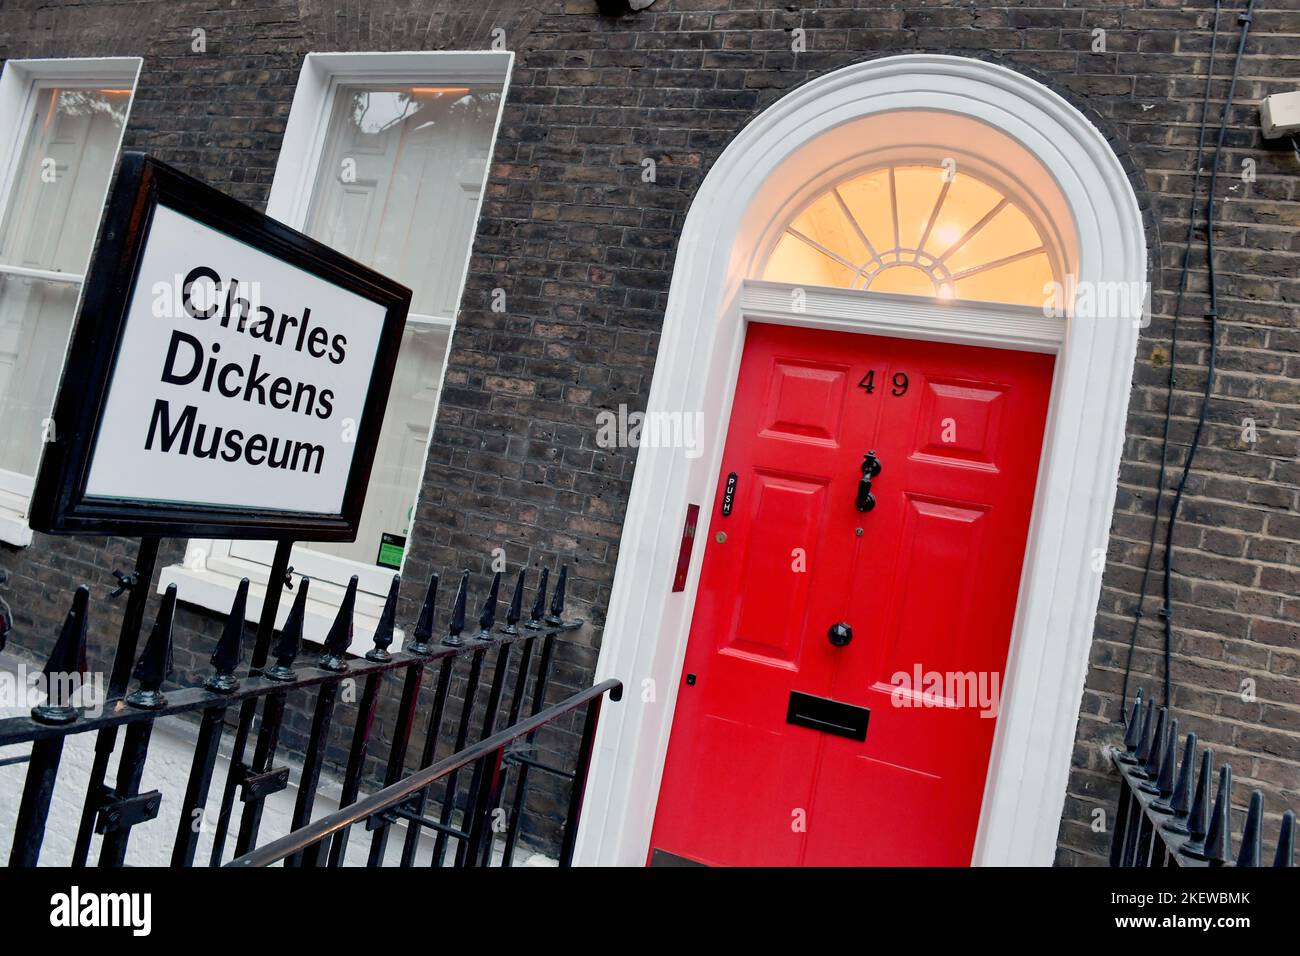 Charles Dickens Muséum - London - England Stock Photo